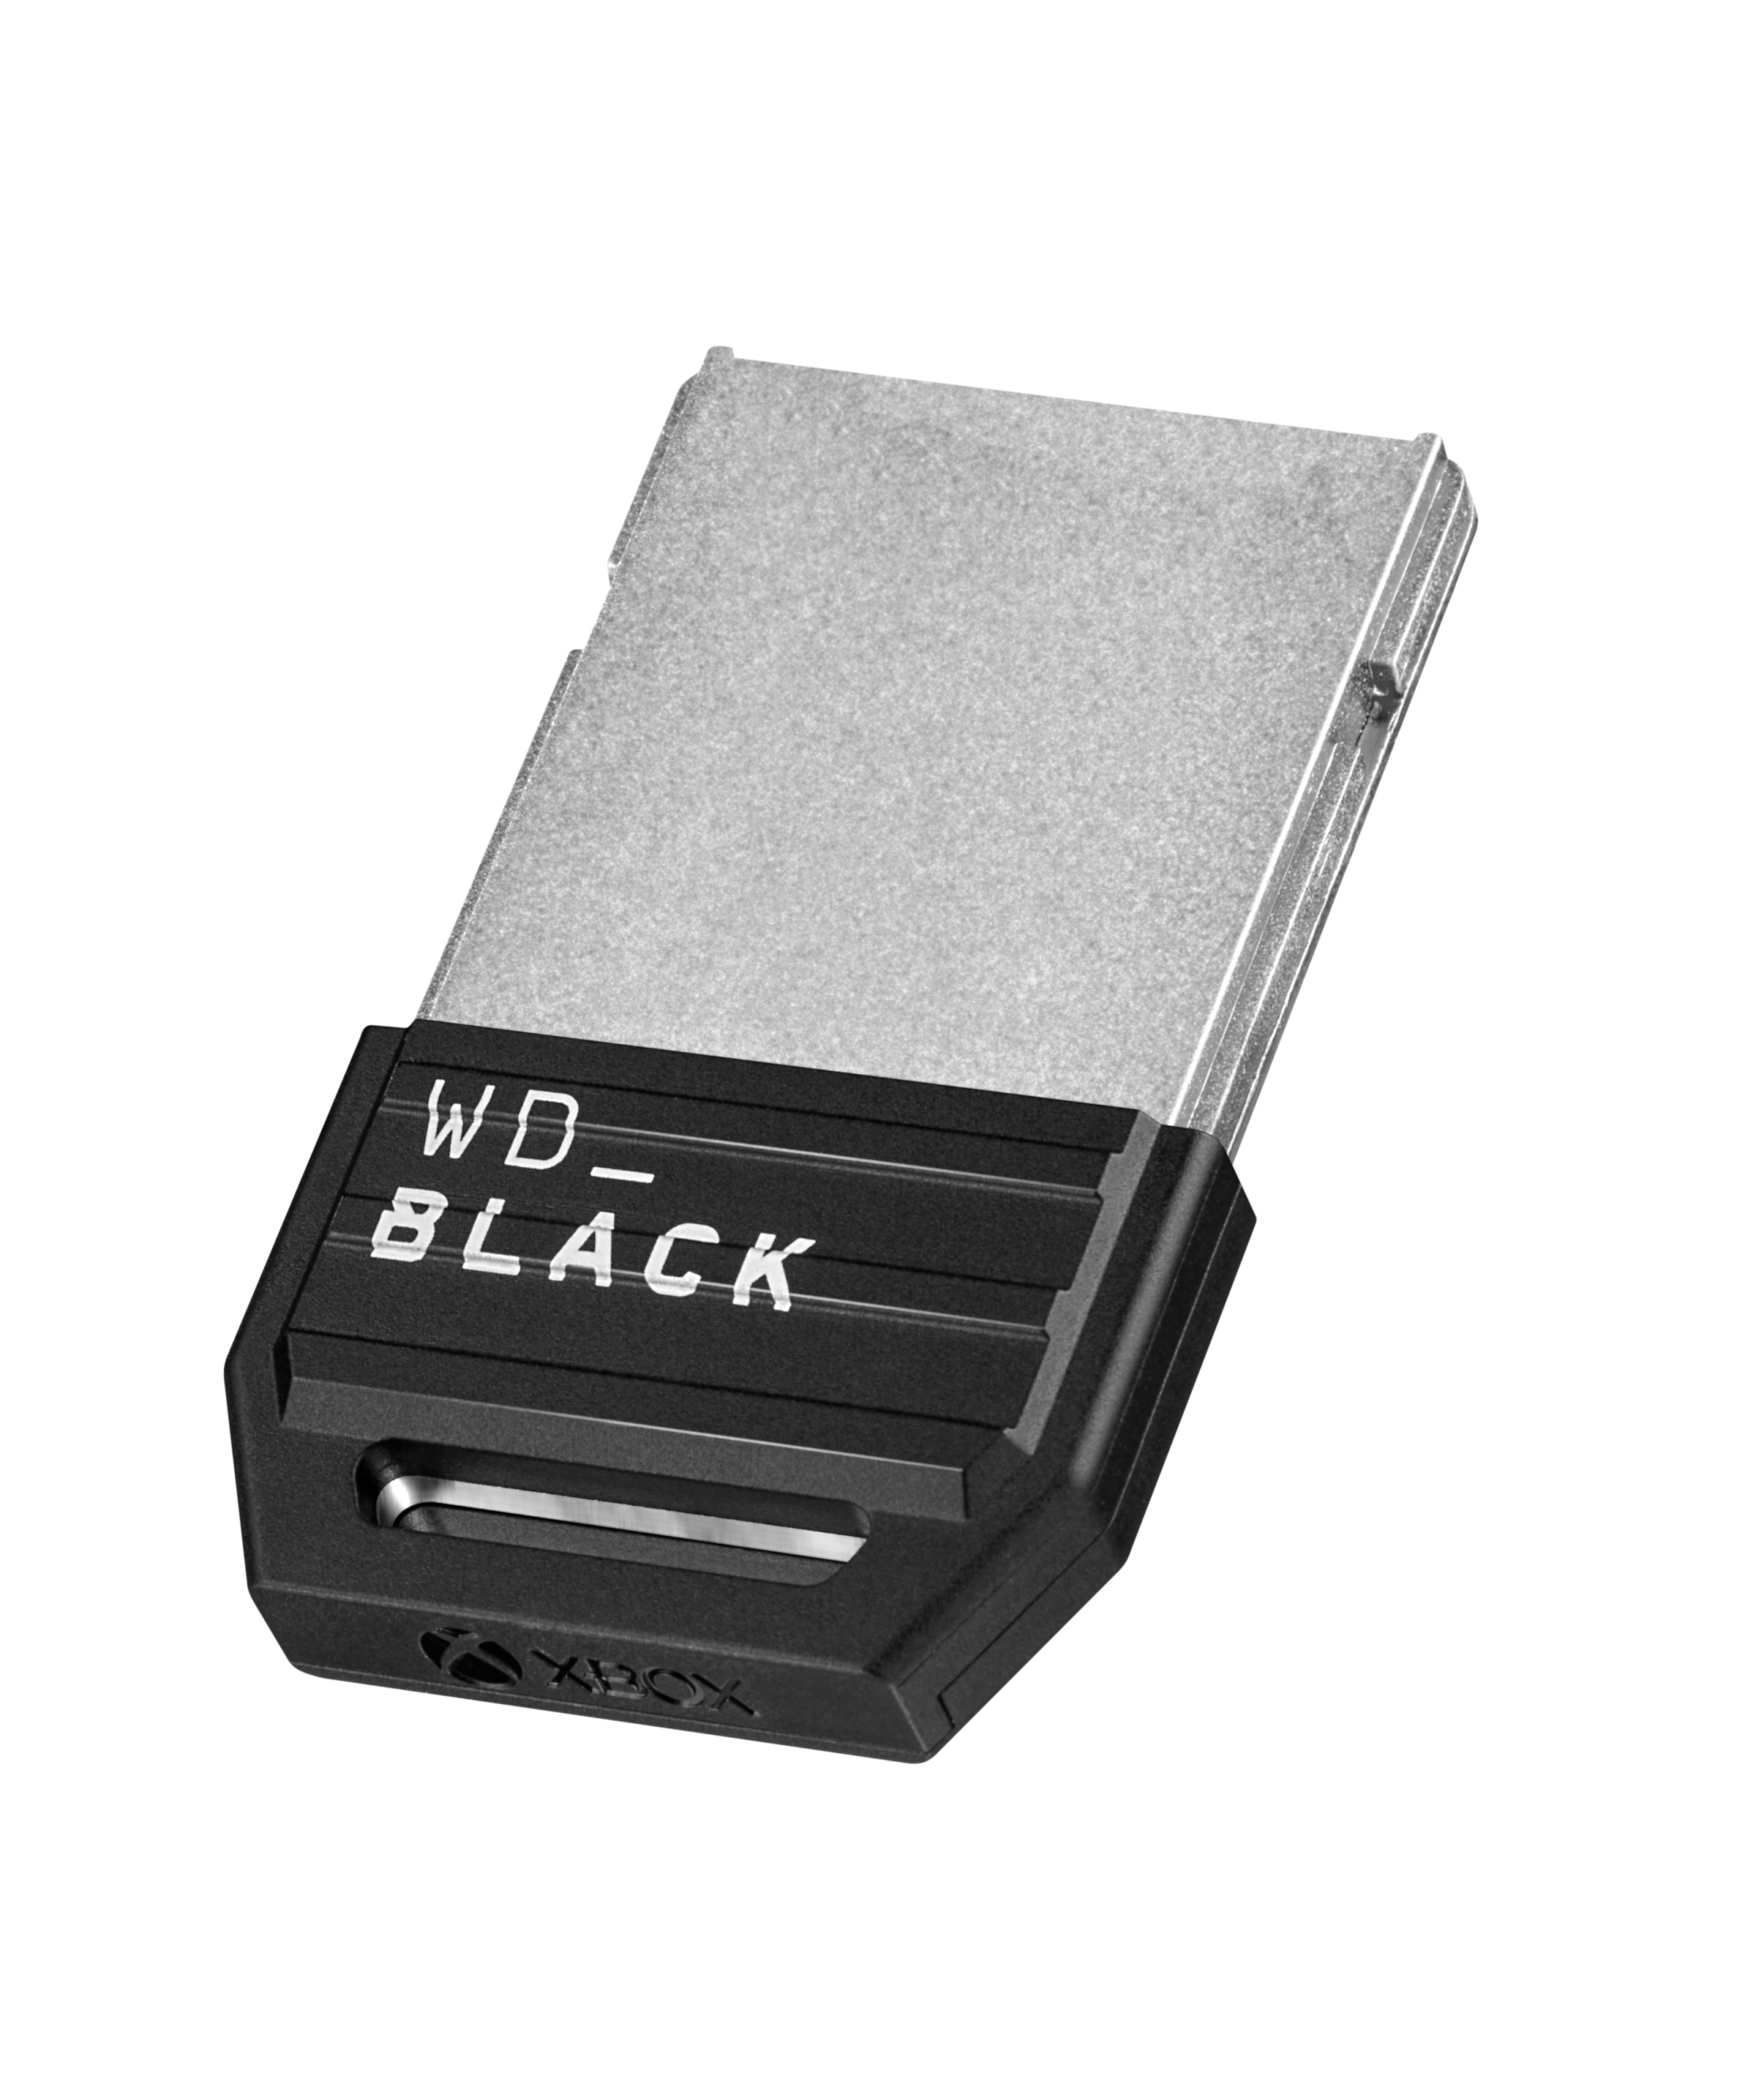 WD_Black externe SSD »C50 Expansion Card for Xbox«, SSD-Speicherkarte | BAUR